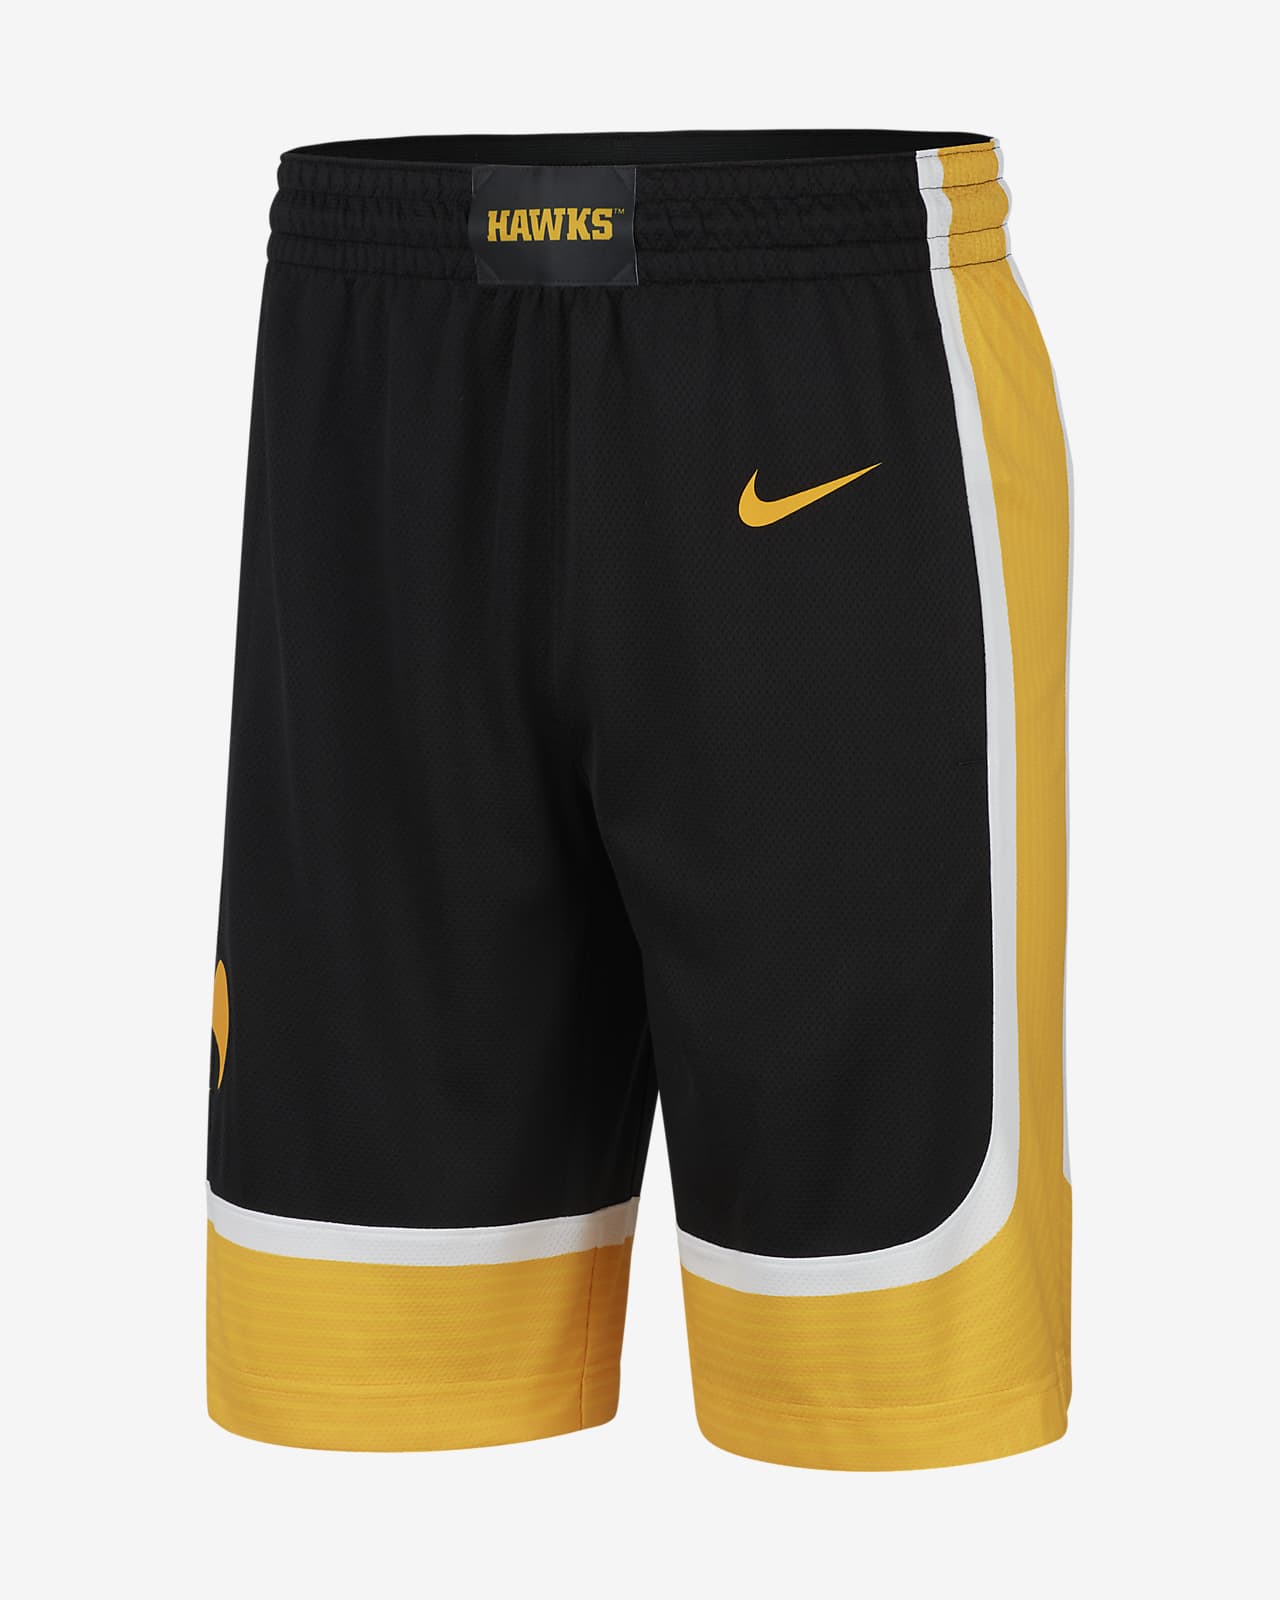 Nike College Dri-FIT (Iowa) Men's Basketball Shorts